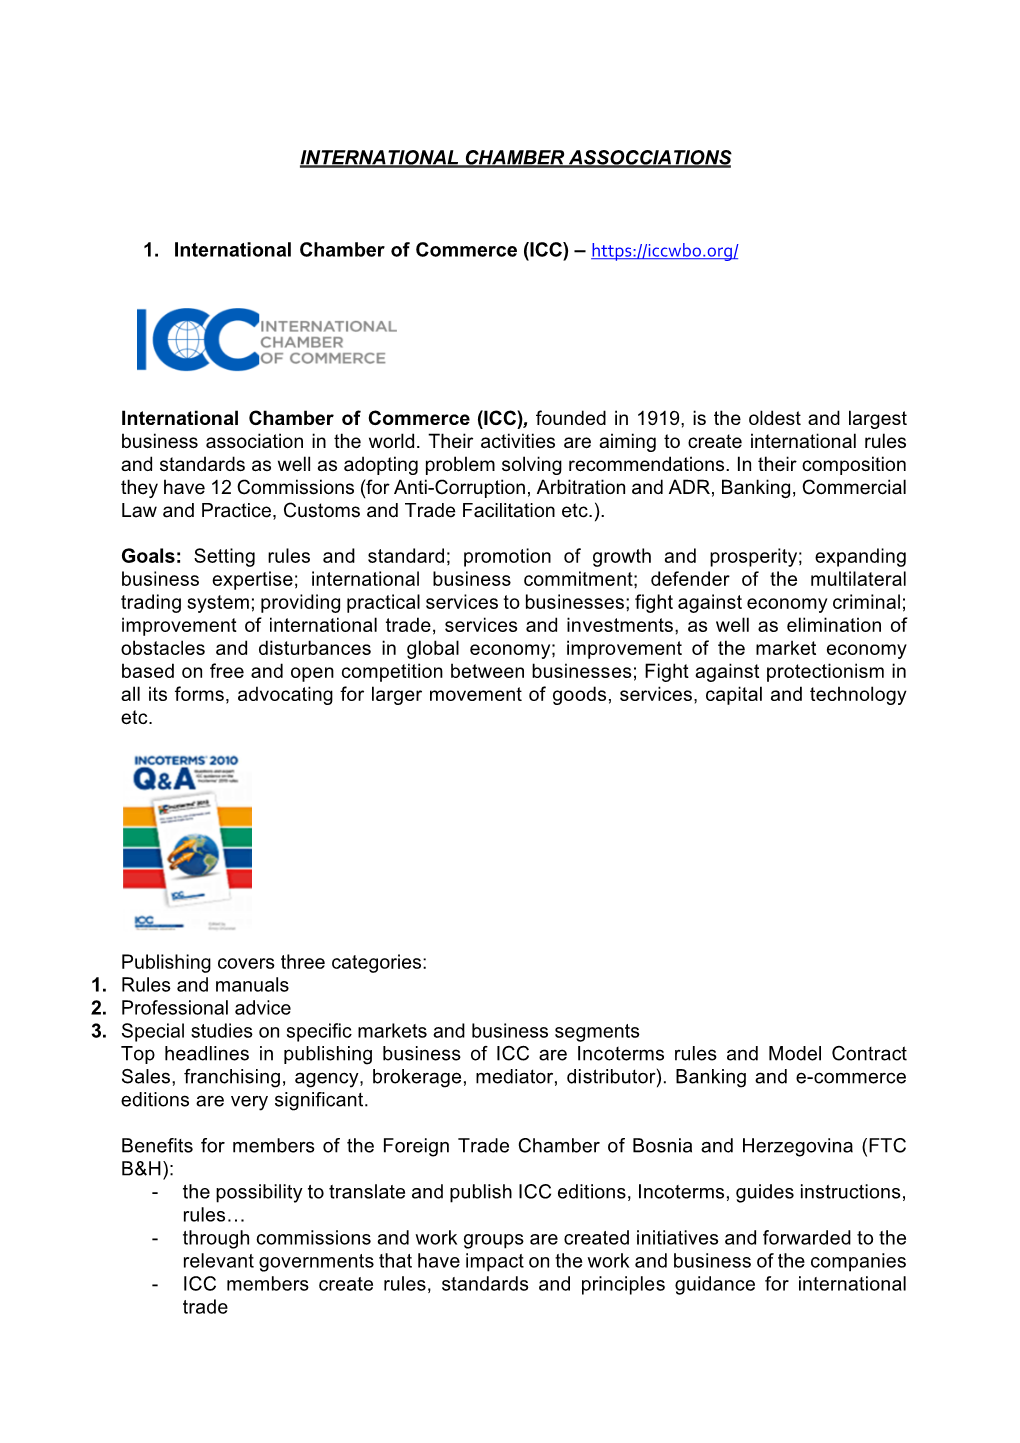 (ICC) – International Chamber of Commerce